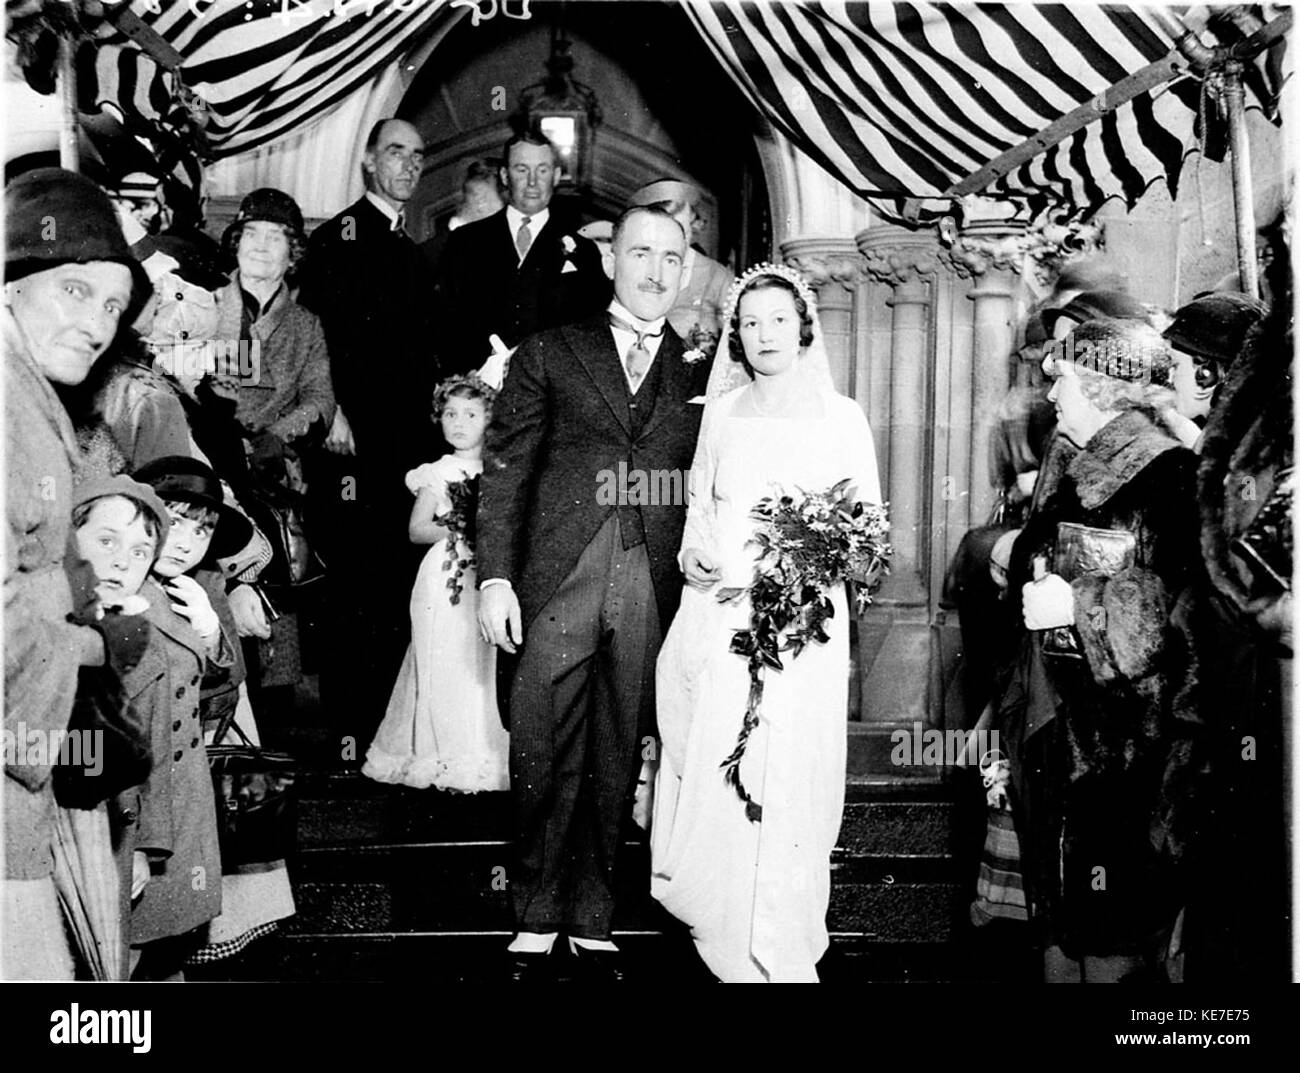 10171 WhitneyFriend wedding St Johns Church Darlinghurst Stock Photo